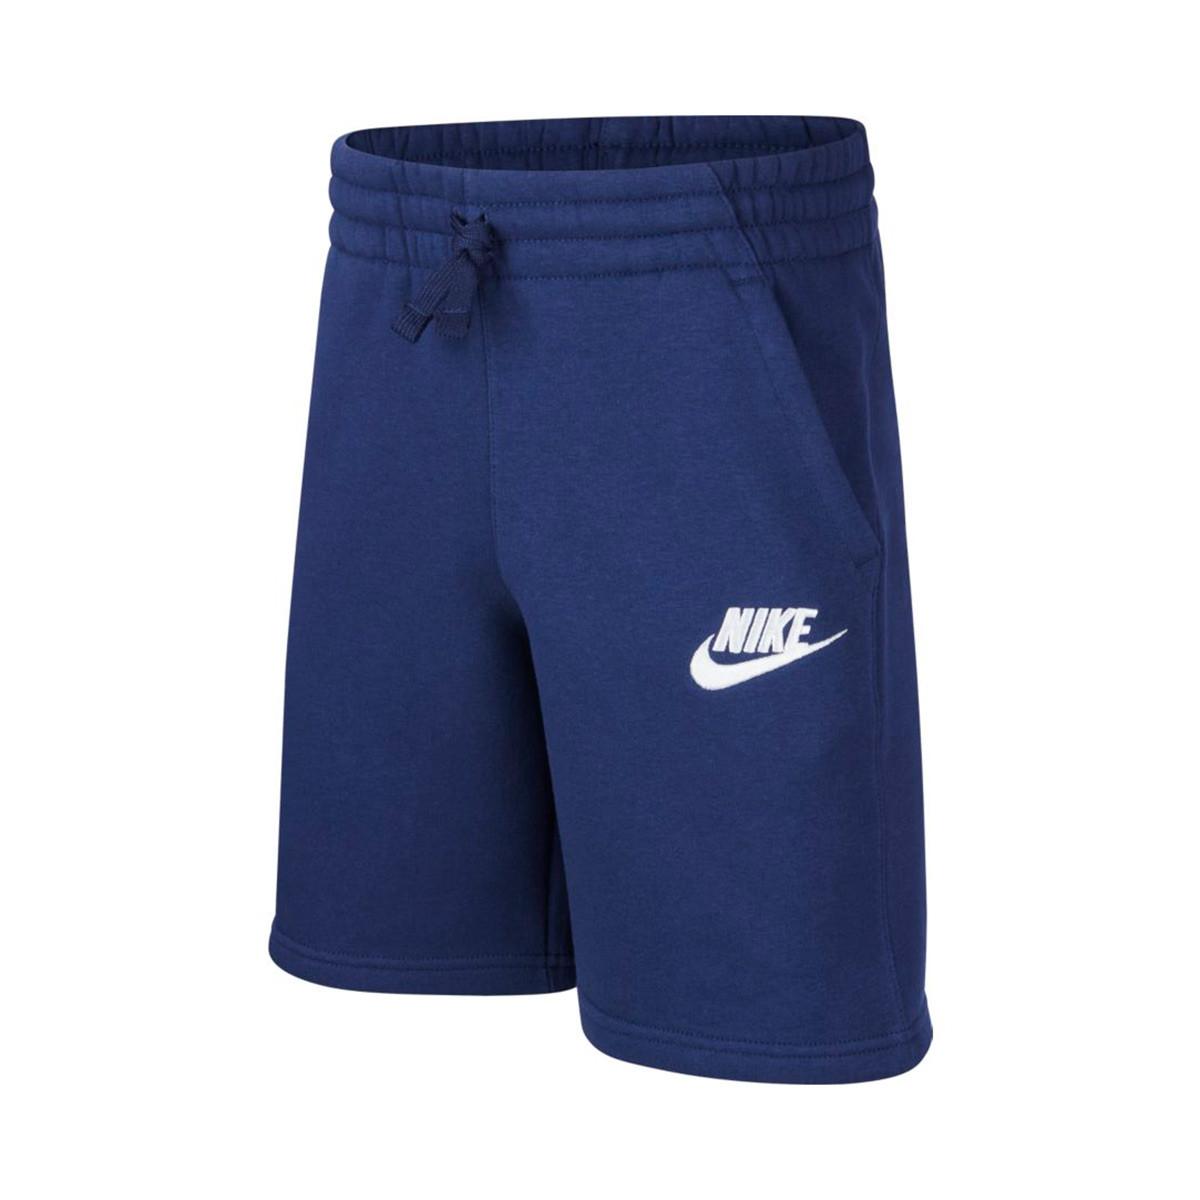 navy blue nike fleece shorts